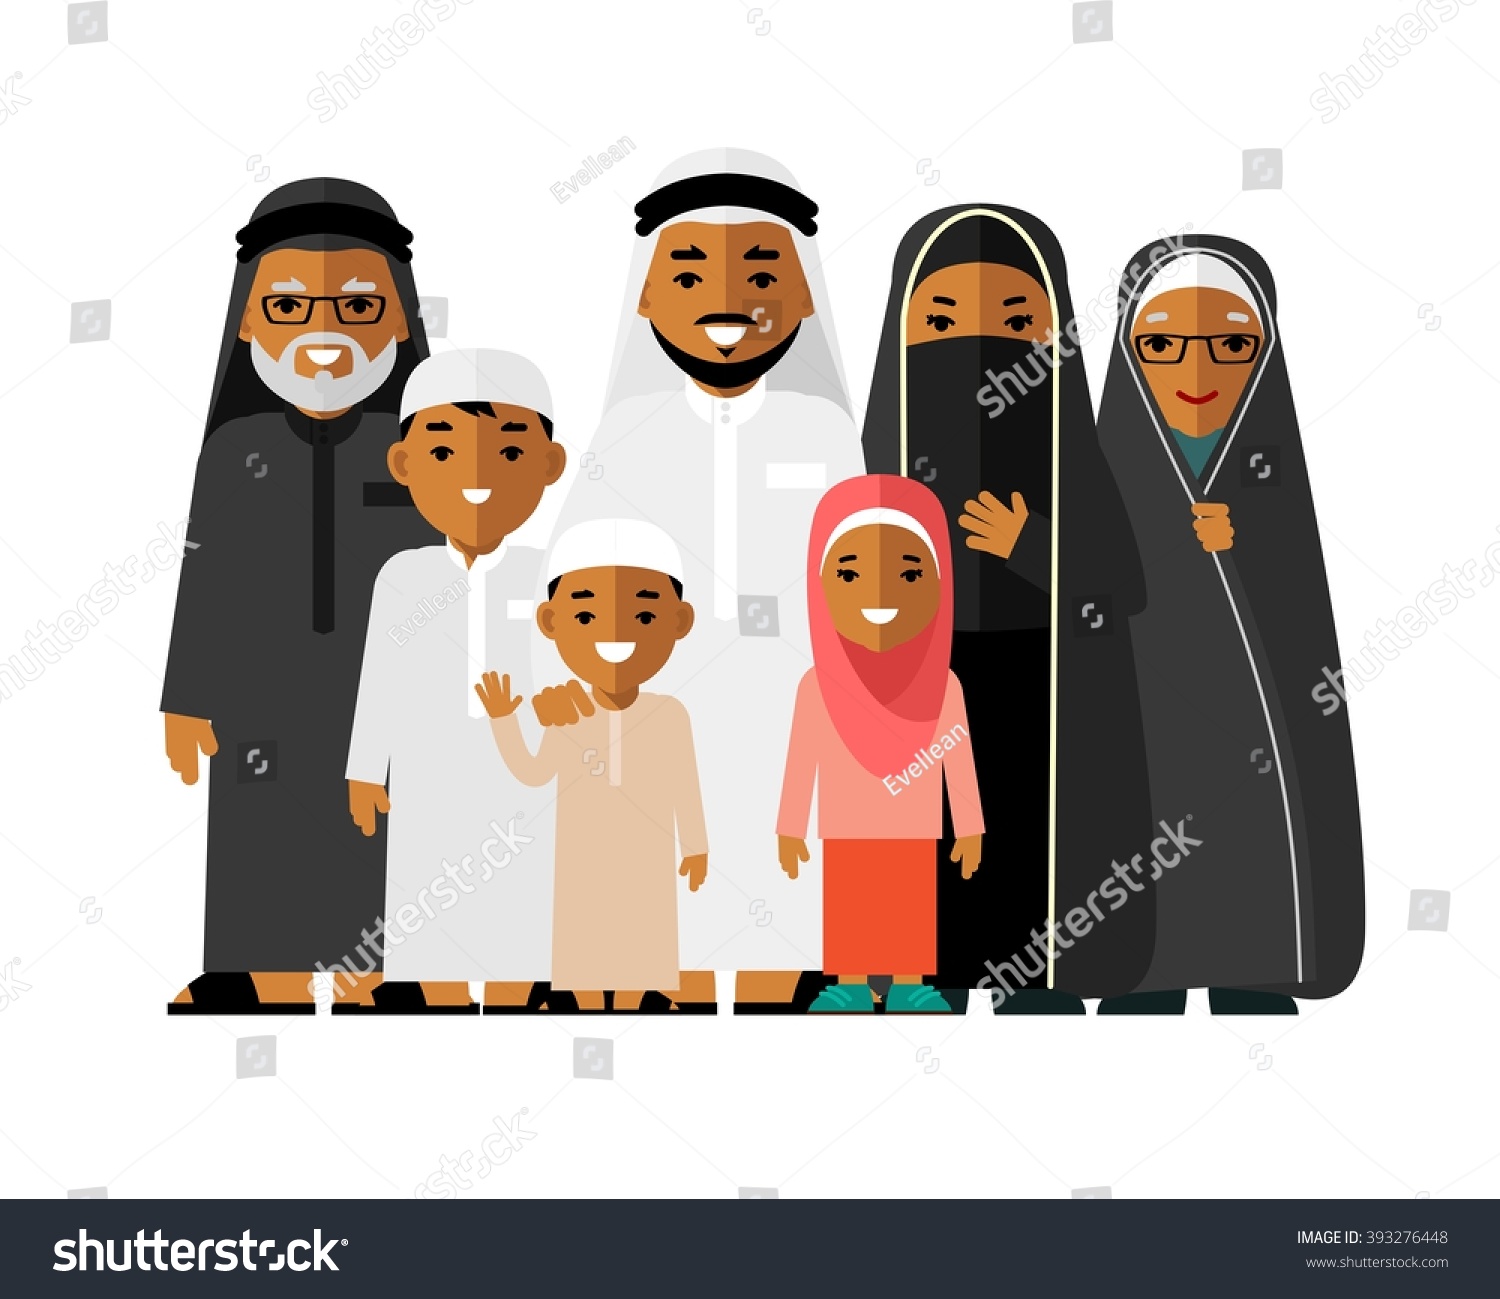 clipart muslim family - photo #21